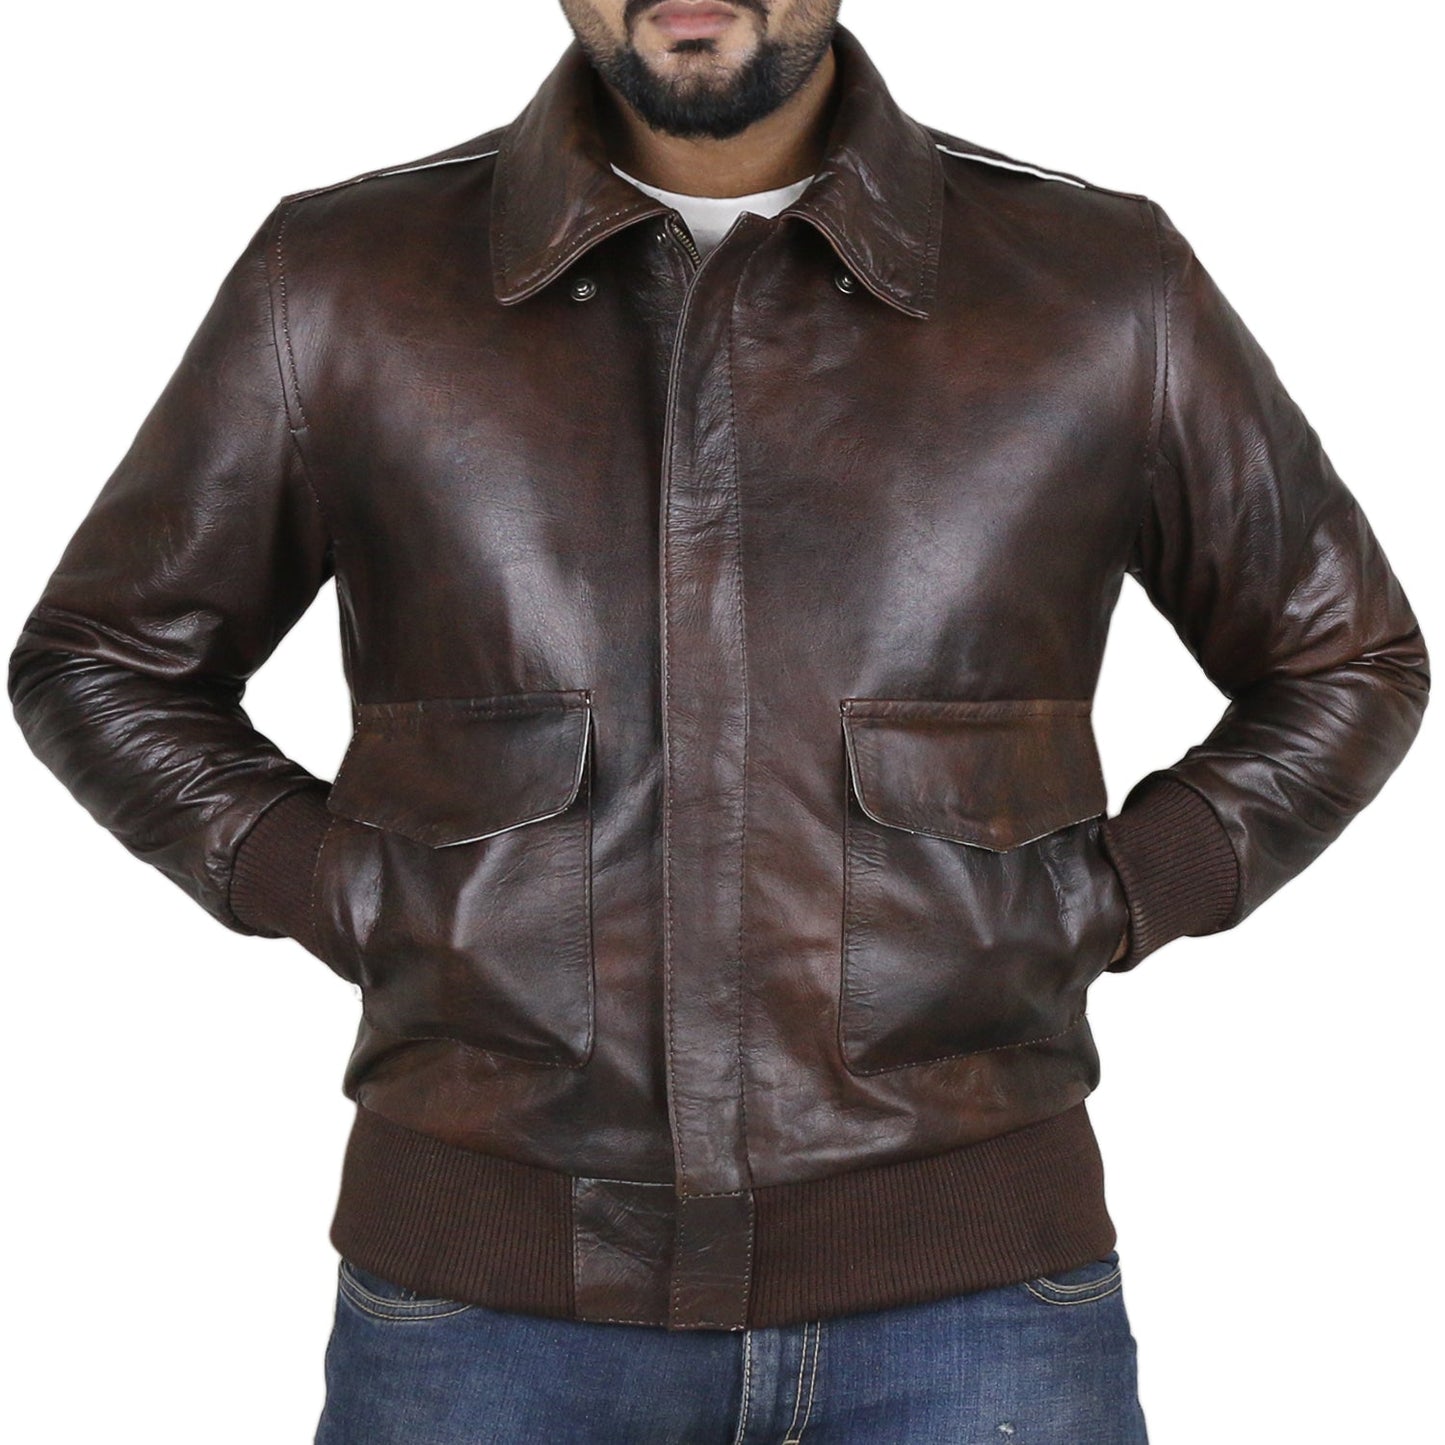 Leather Jackets Hub Mens Genuine Lambskin Leather Jacket (Brown-Tan, Aviator Jacket) - 2201001